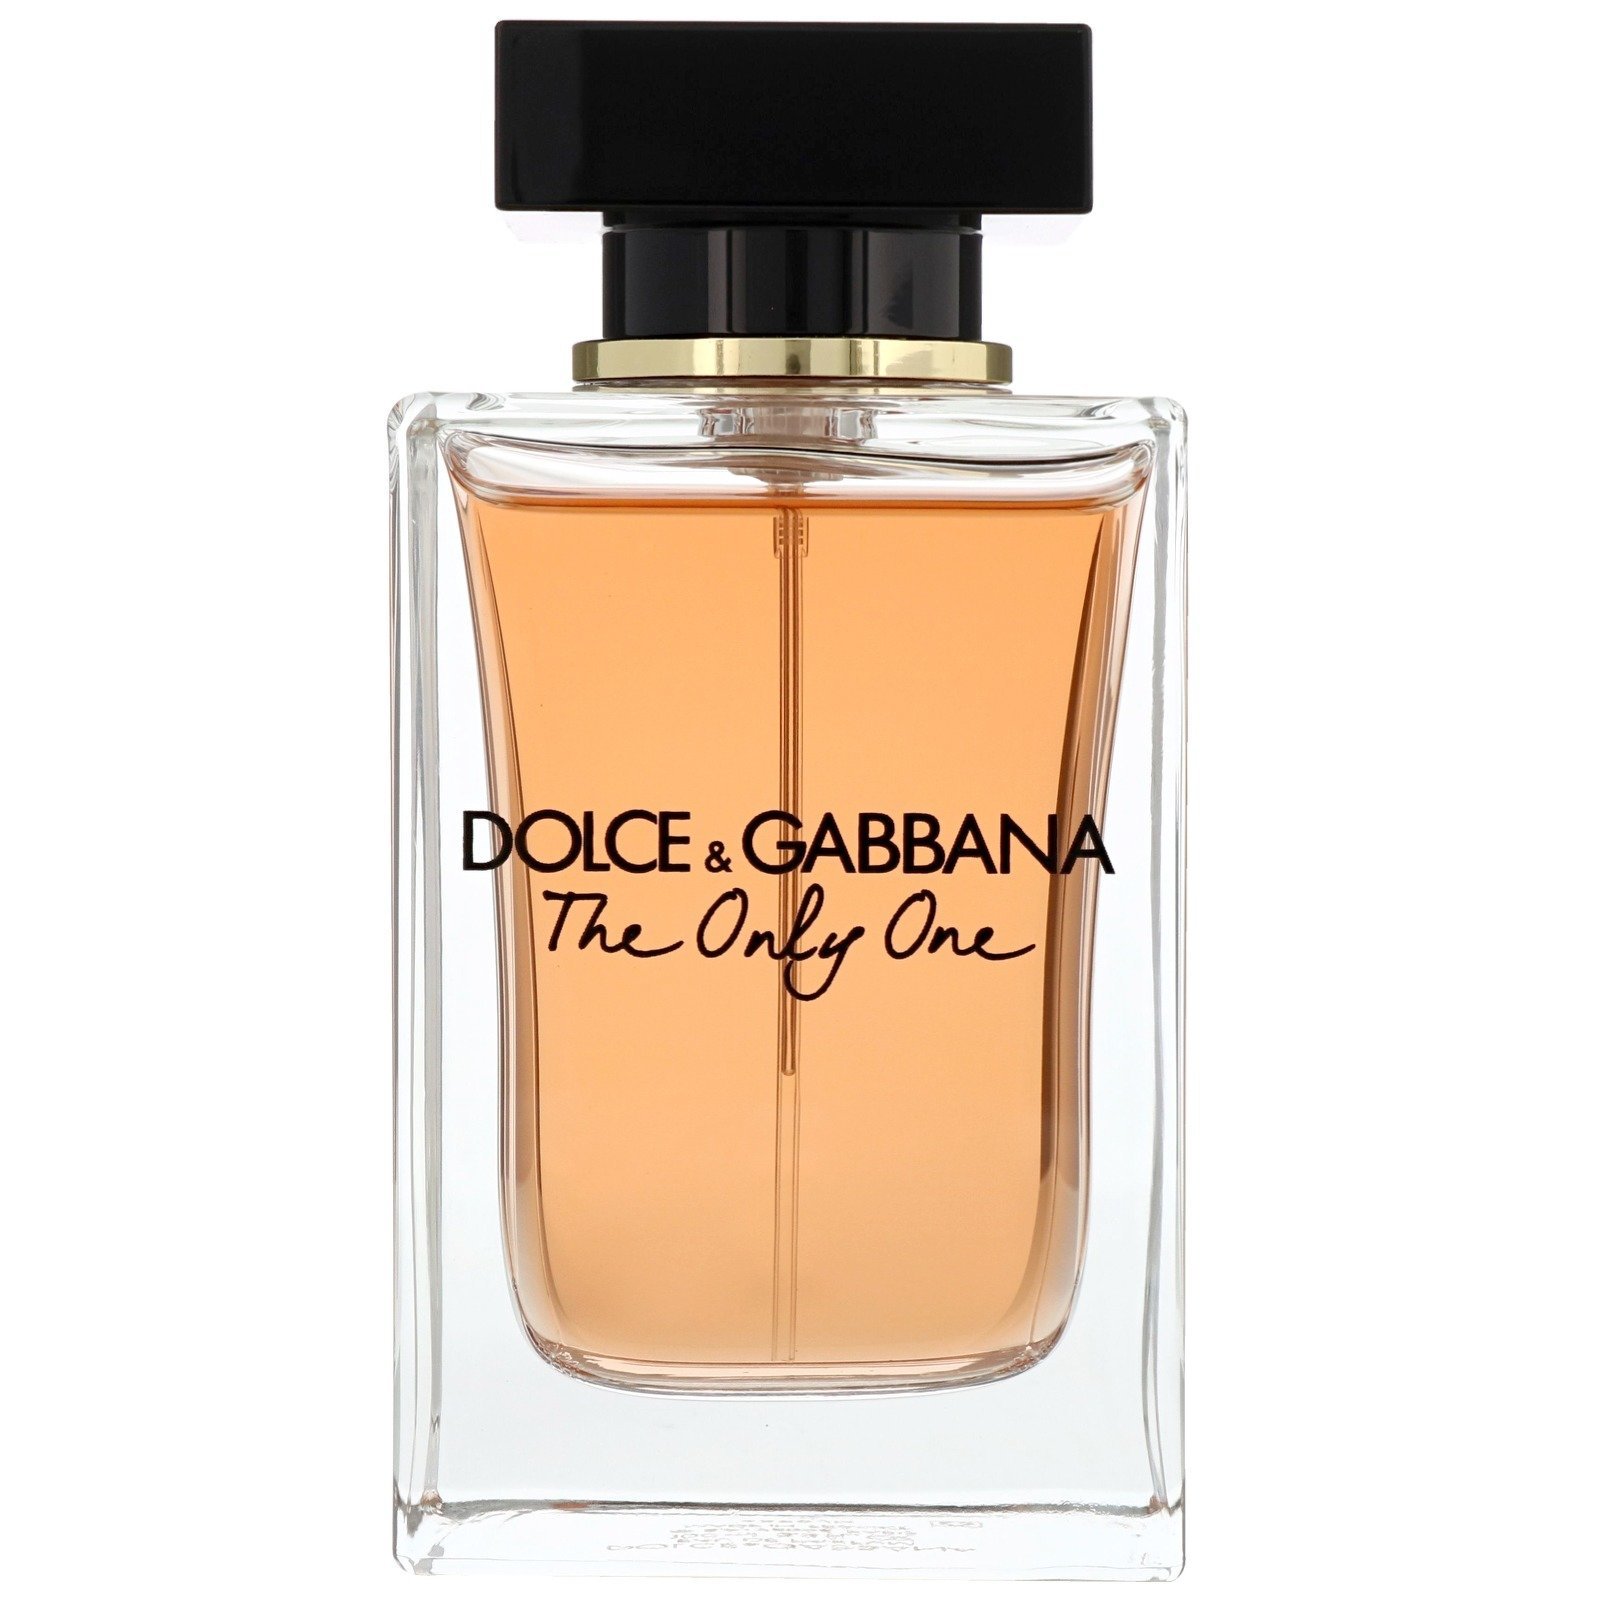 Духи дольче габбана онли. Dolce & Gabbana the only one, EDP., 100 ml. Dolce & Gabbana the only one 100 мл. Dolce & Gabbana the only one EDP 50 ml. Dolce& Gabbana the only one 2 EDP, 100 ml.